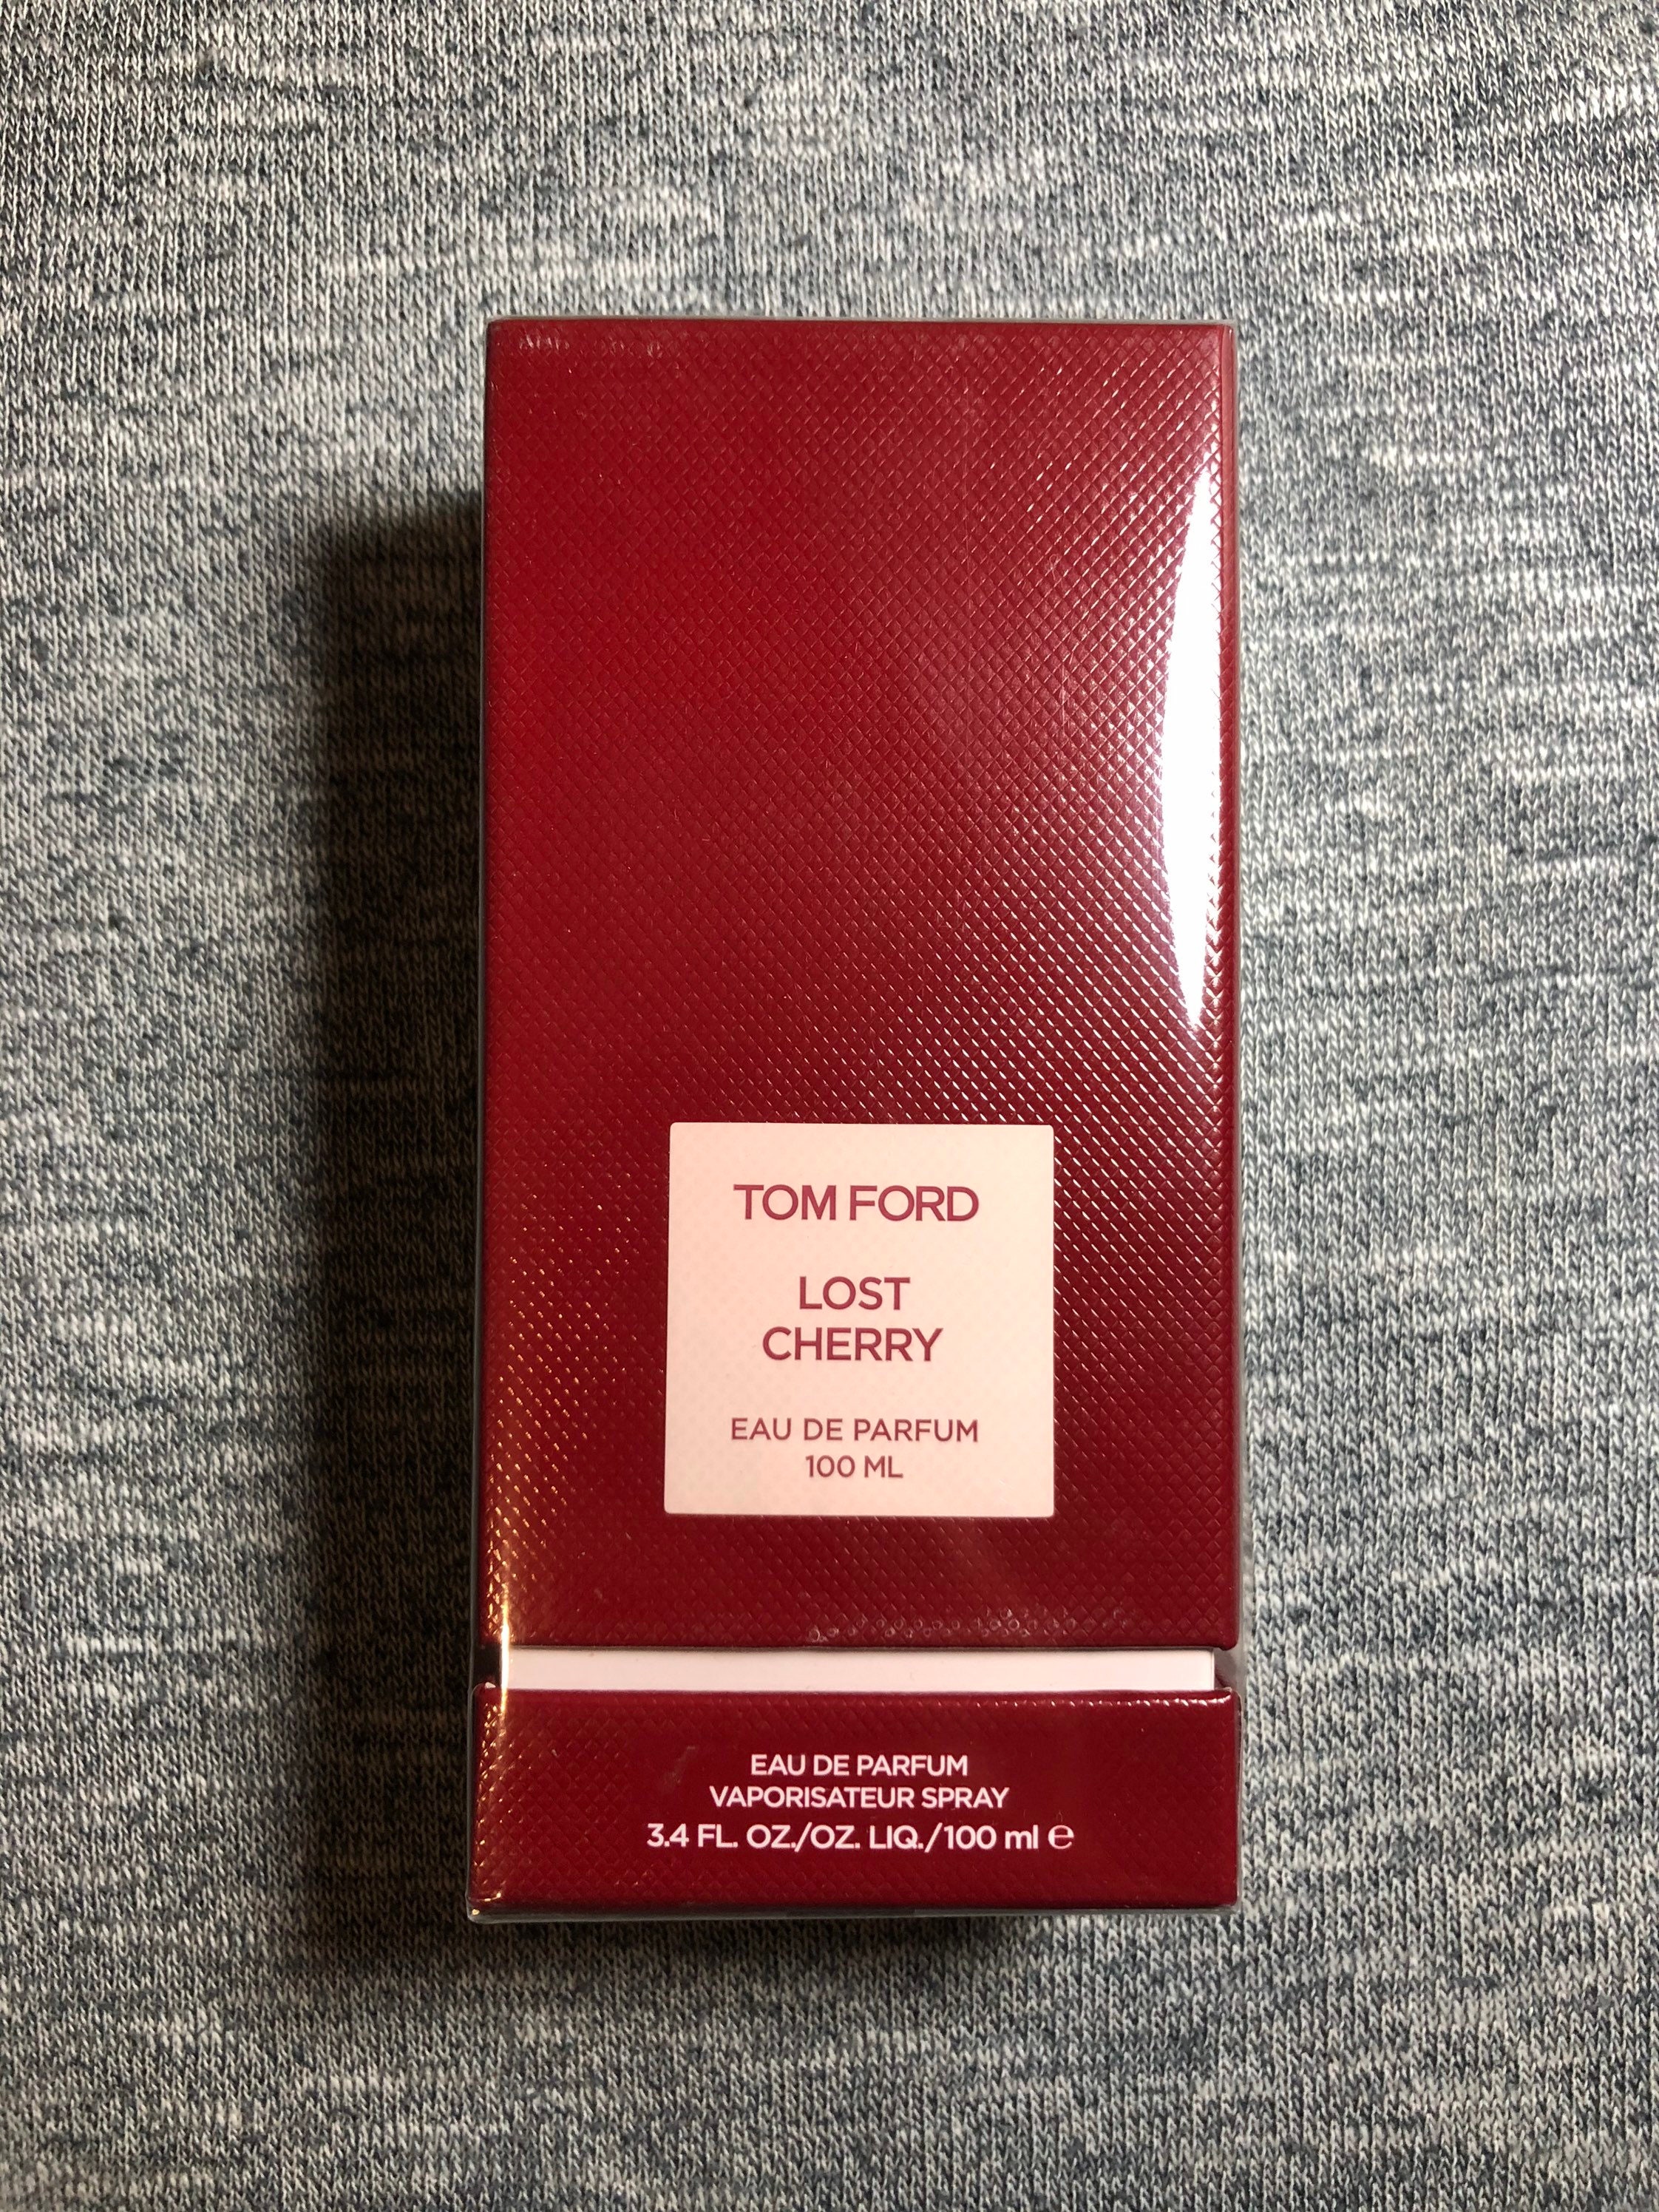 Tom Ford Lost Cherry | Etsy